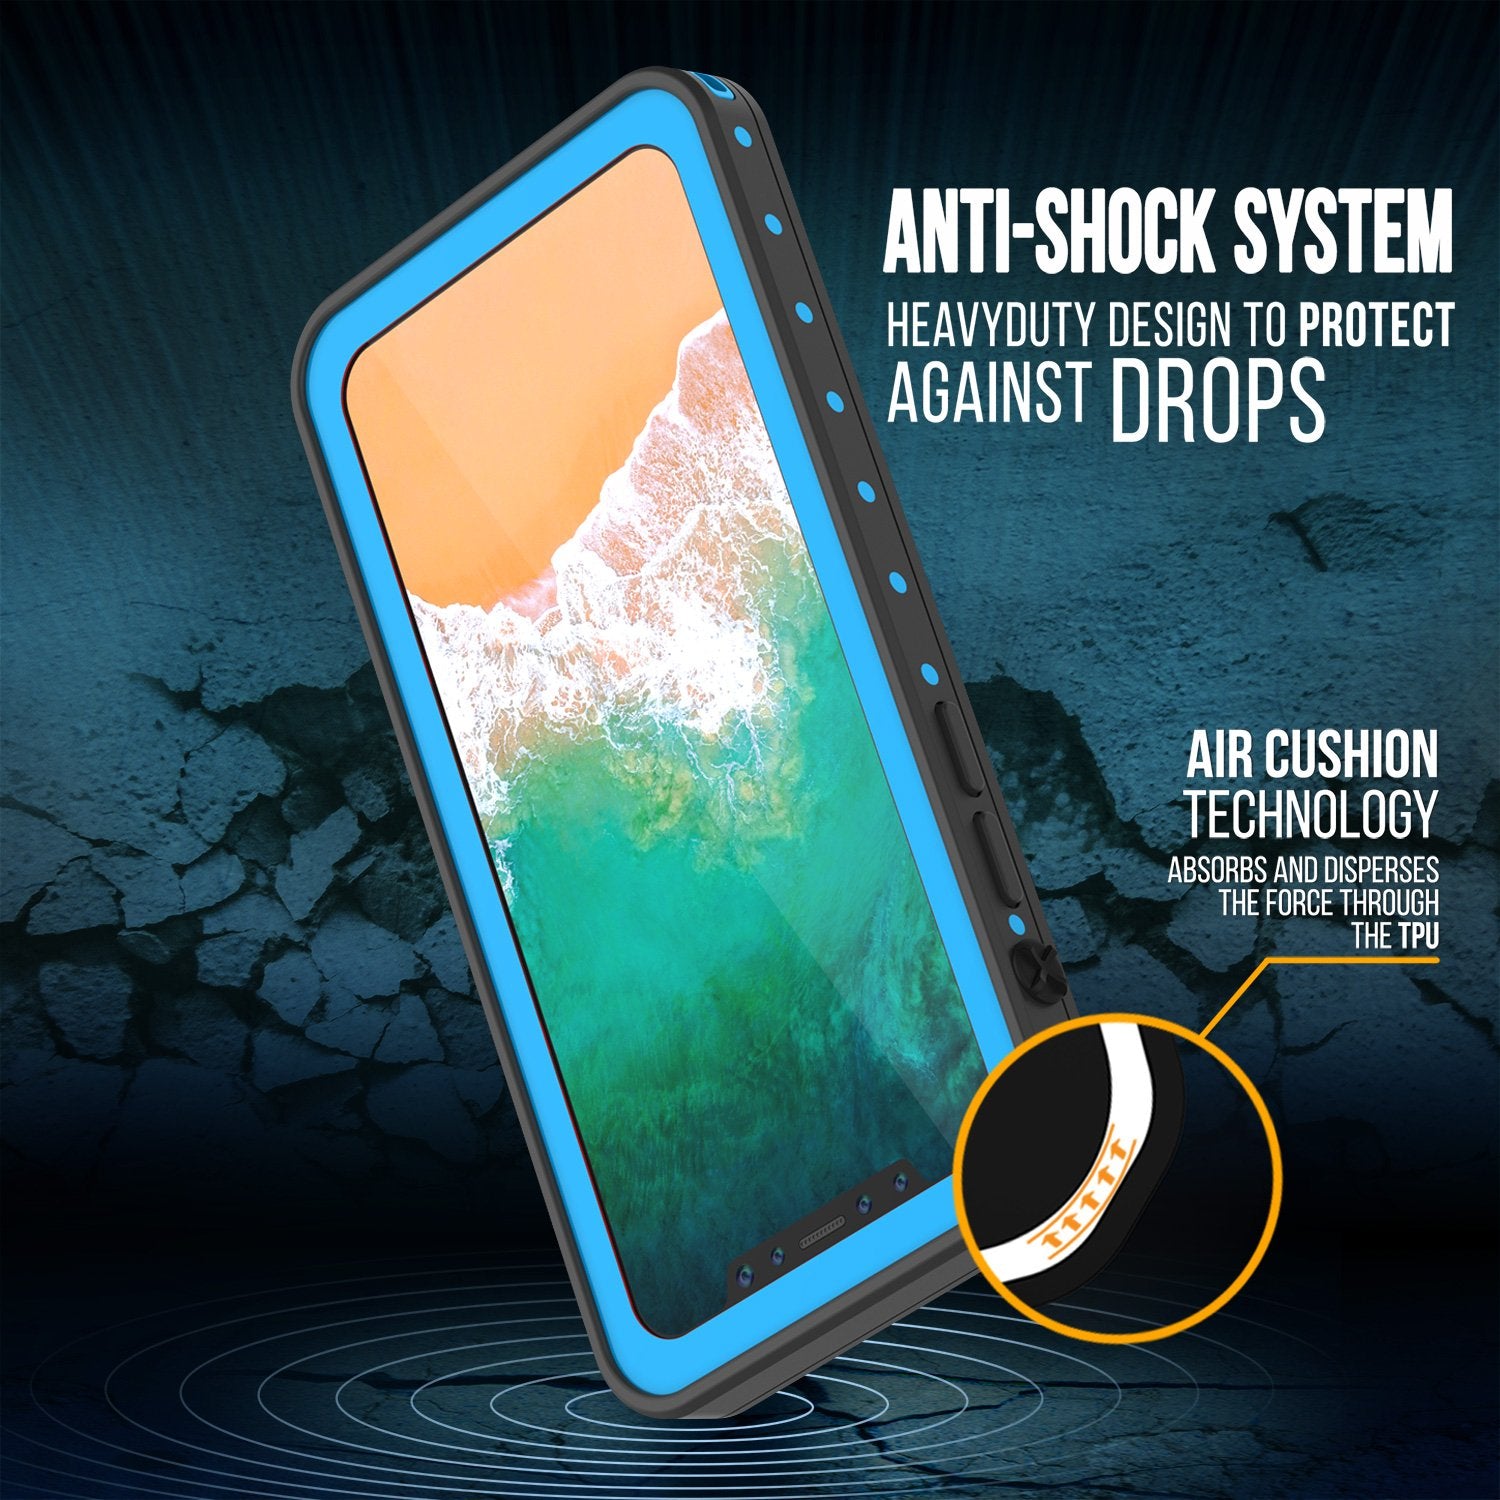 iPhone X Plus Waterproof Punkcase StudStar Series Cover [Light Blue]